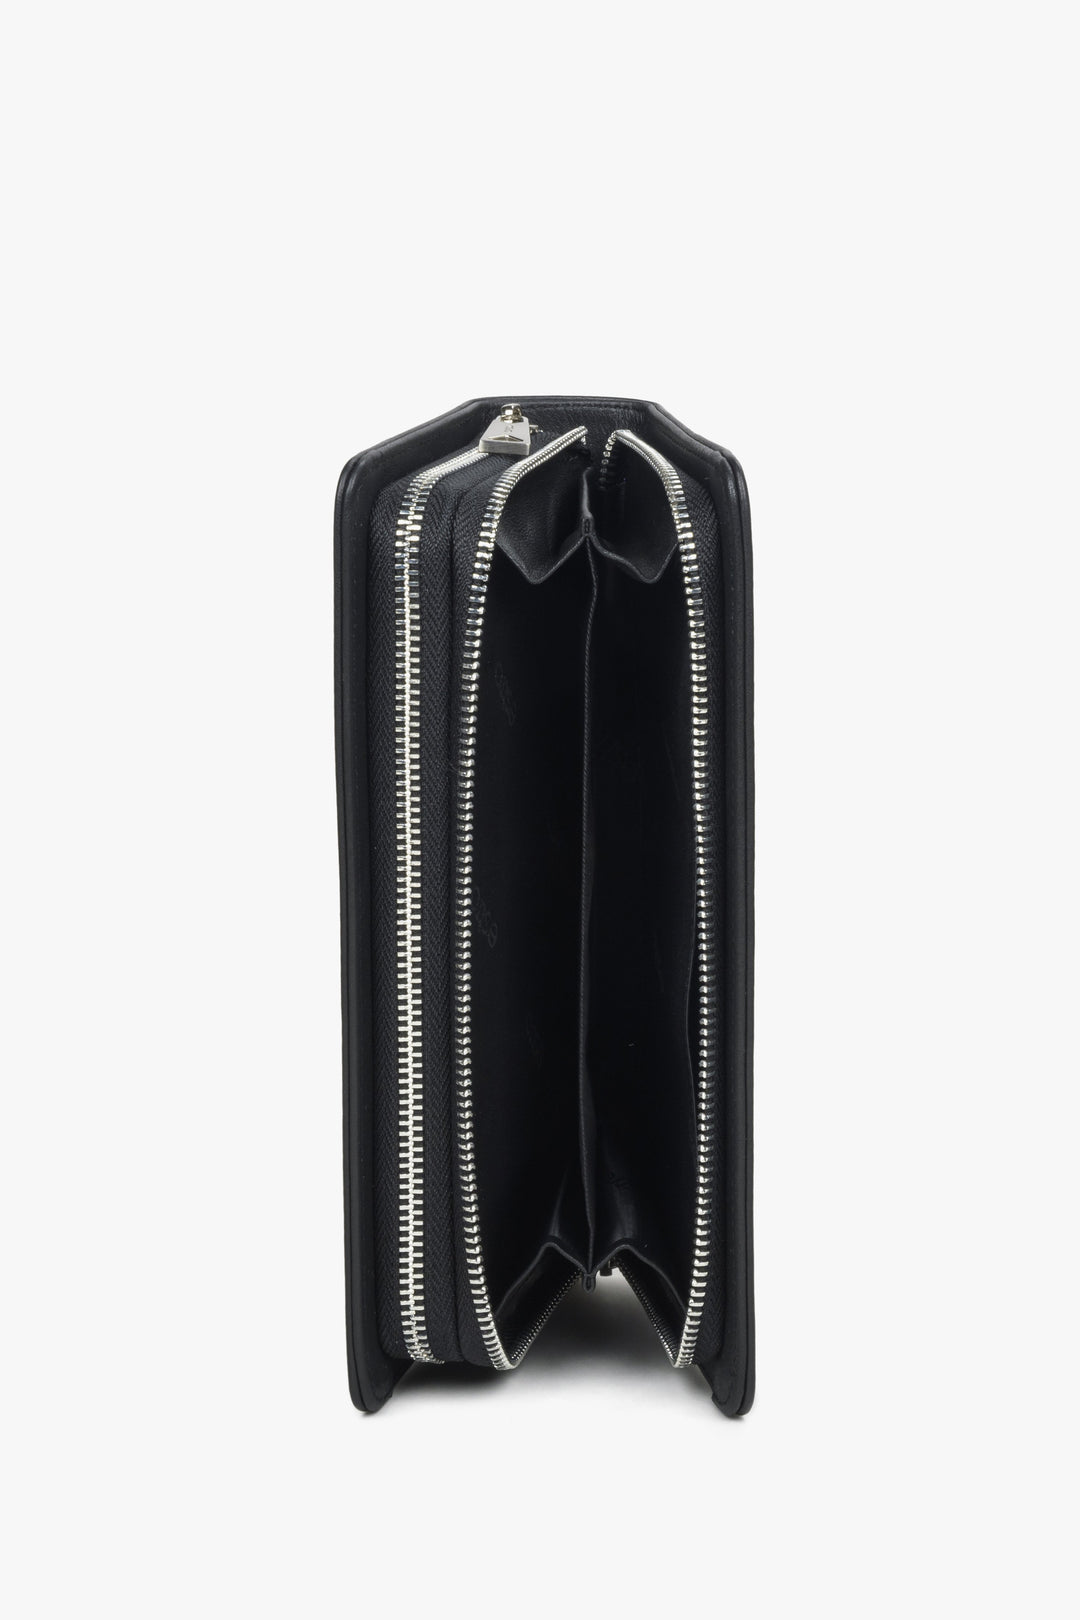 Estro large format black leather men's coin purse - interior presentation of the model.